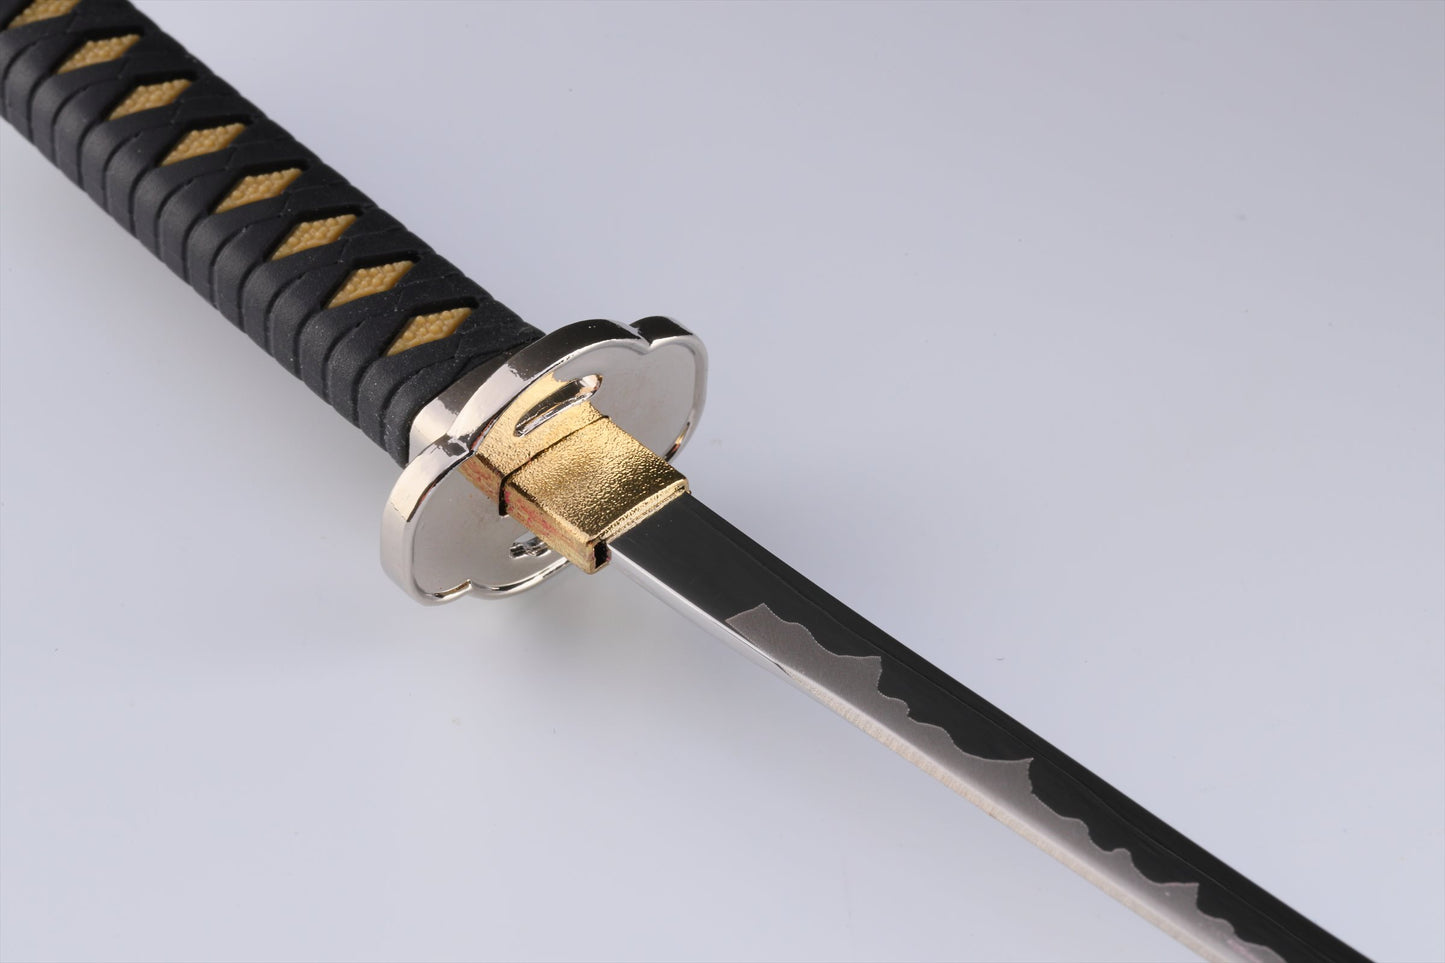 Letter Opener SAMURAI KATANA SWORD Knife Hijikata Toshizo Model MT-34TH Desk Decor item 8 inch Length Safe Edge